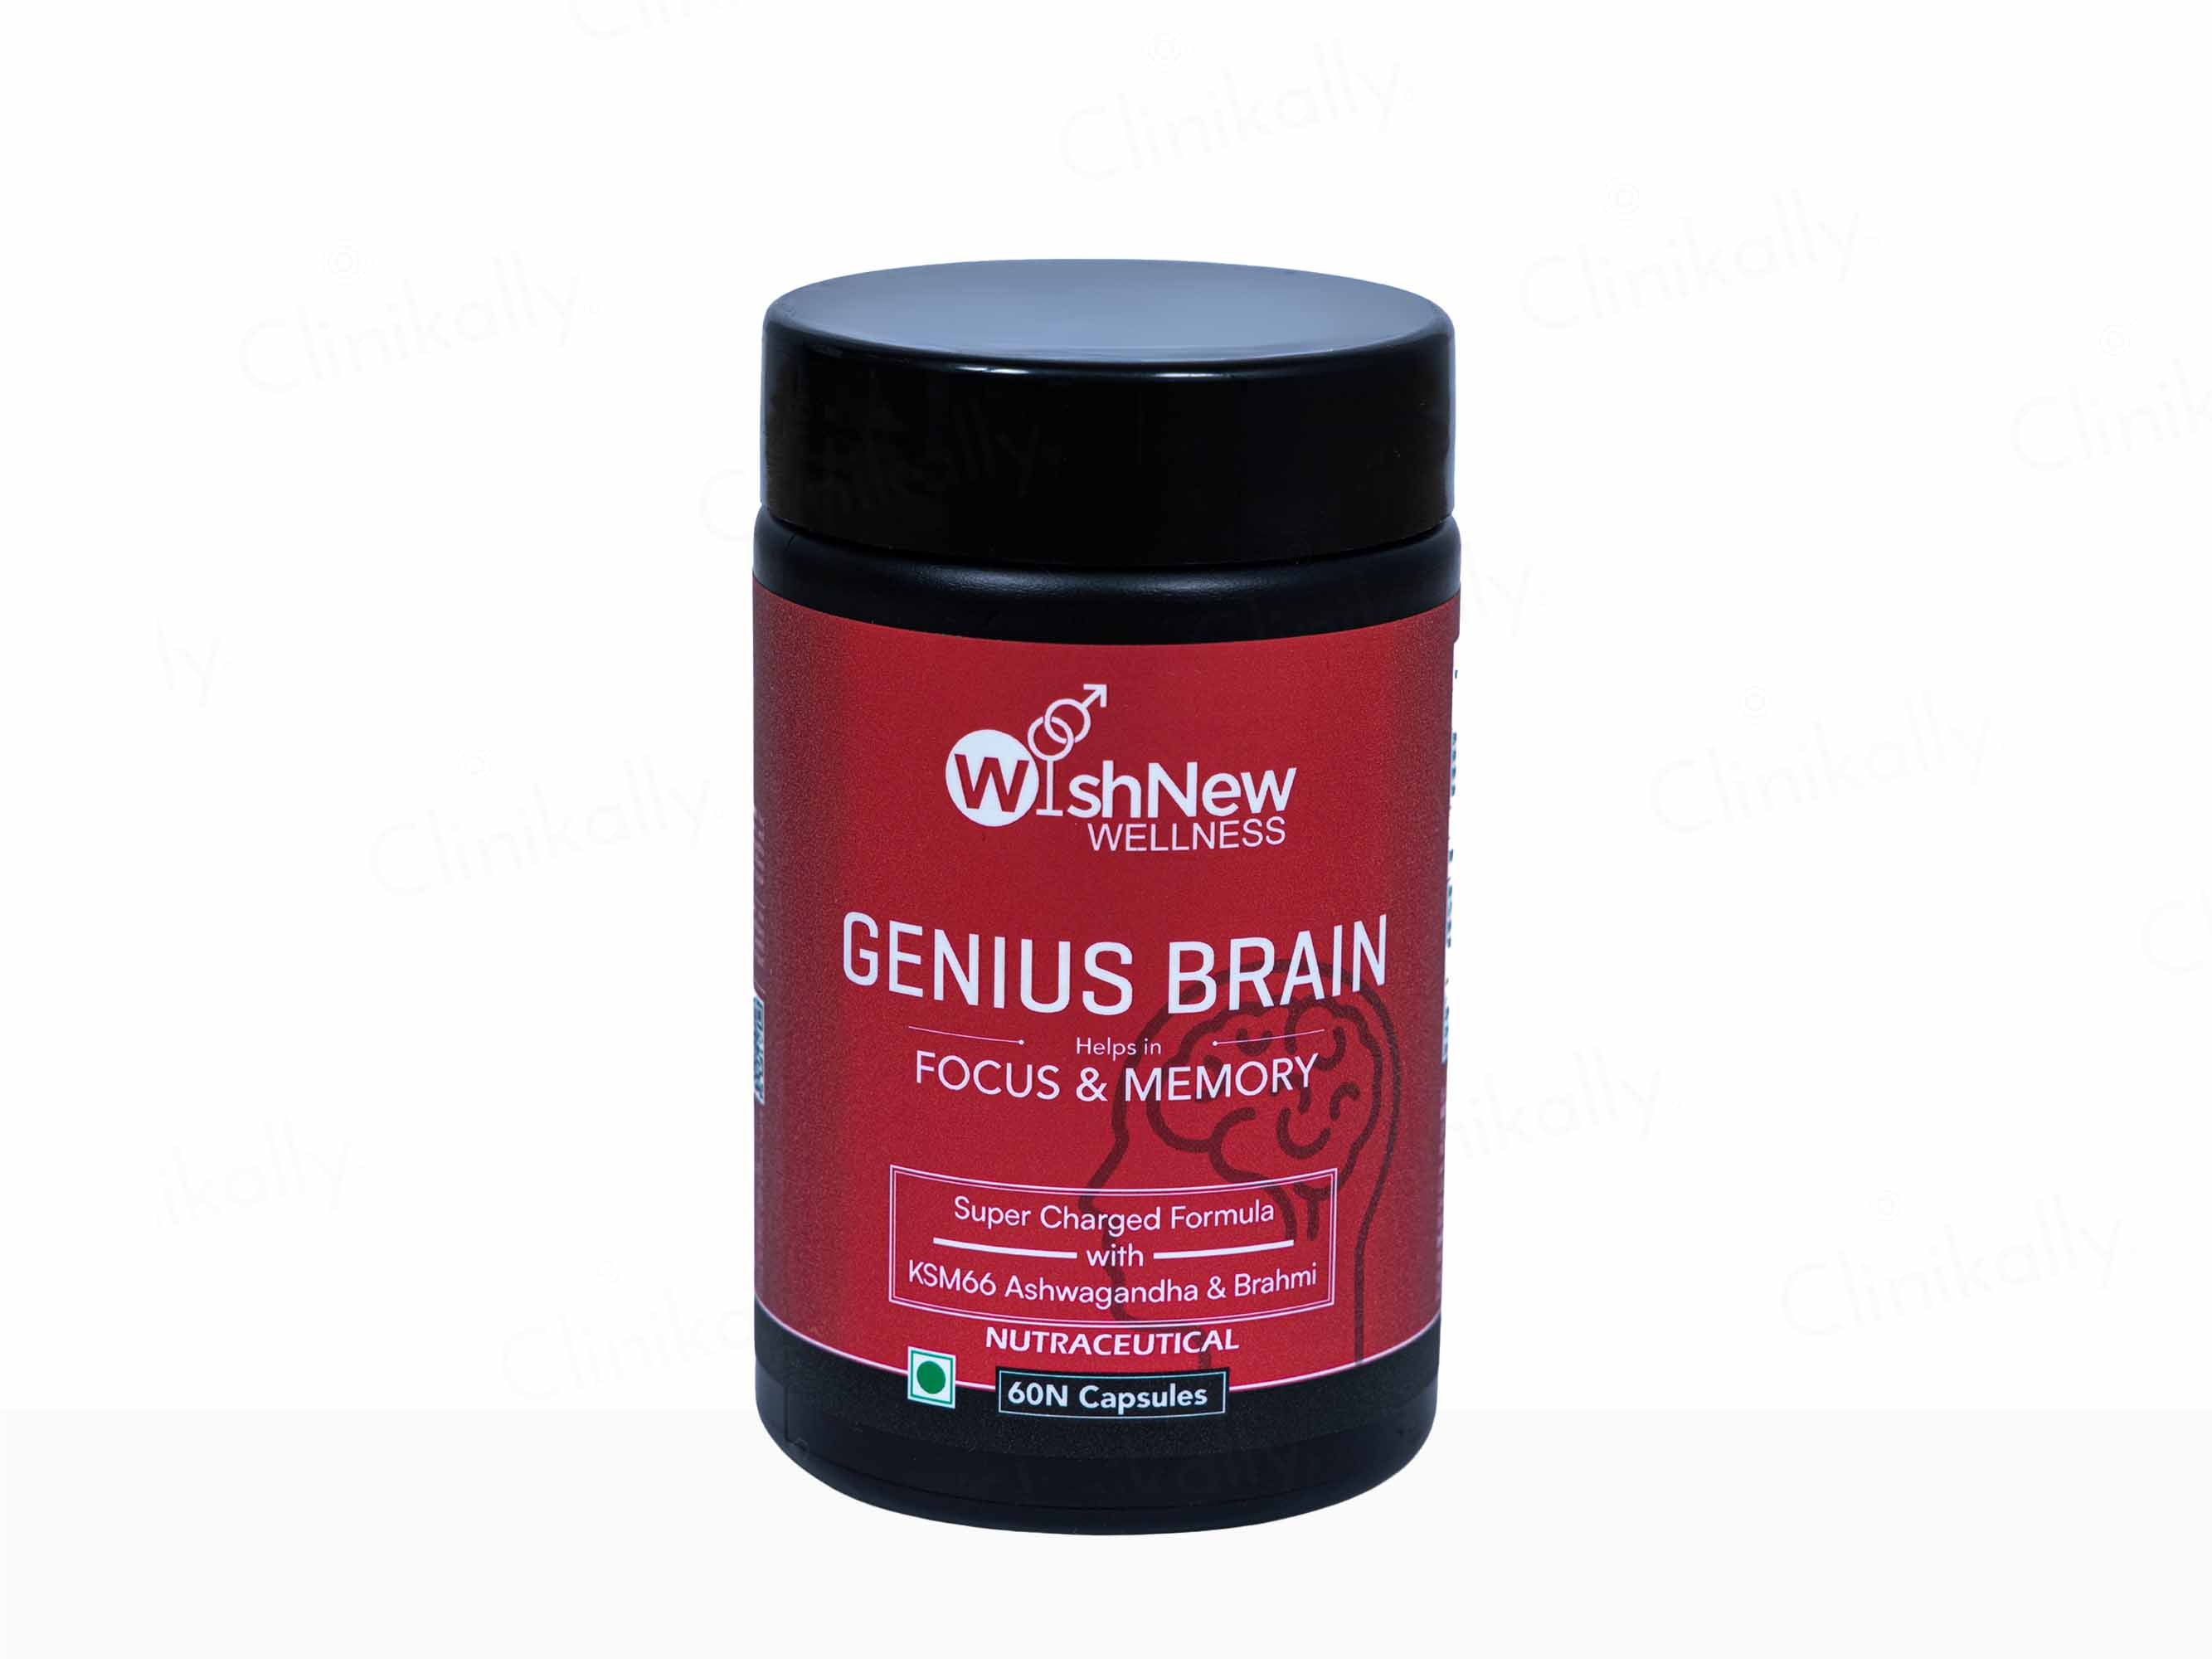 WishNew Wellness Genius Brain Focus & Memory Capsule